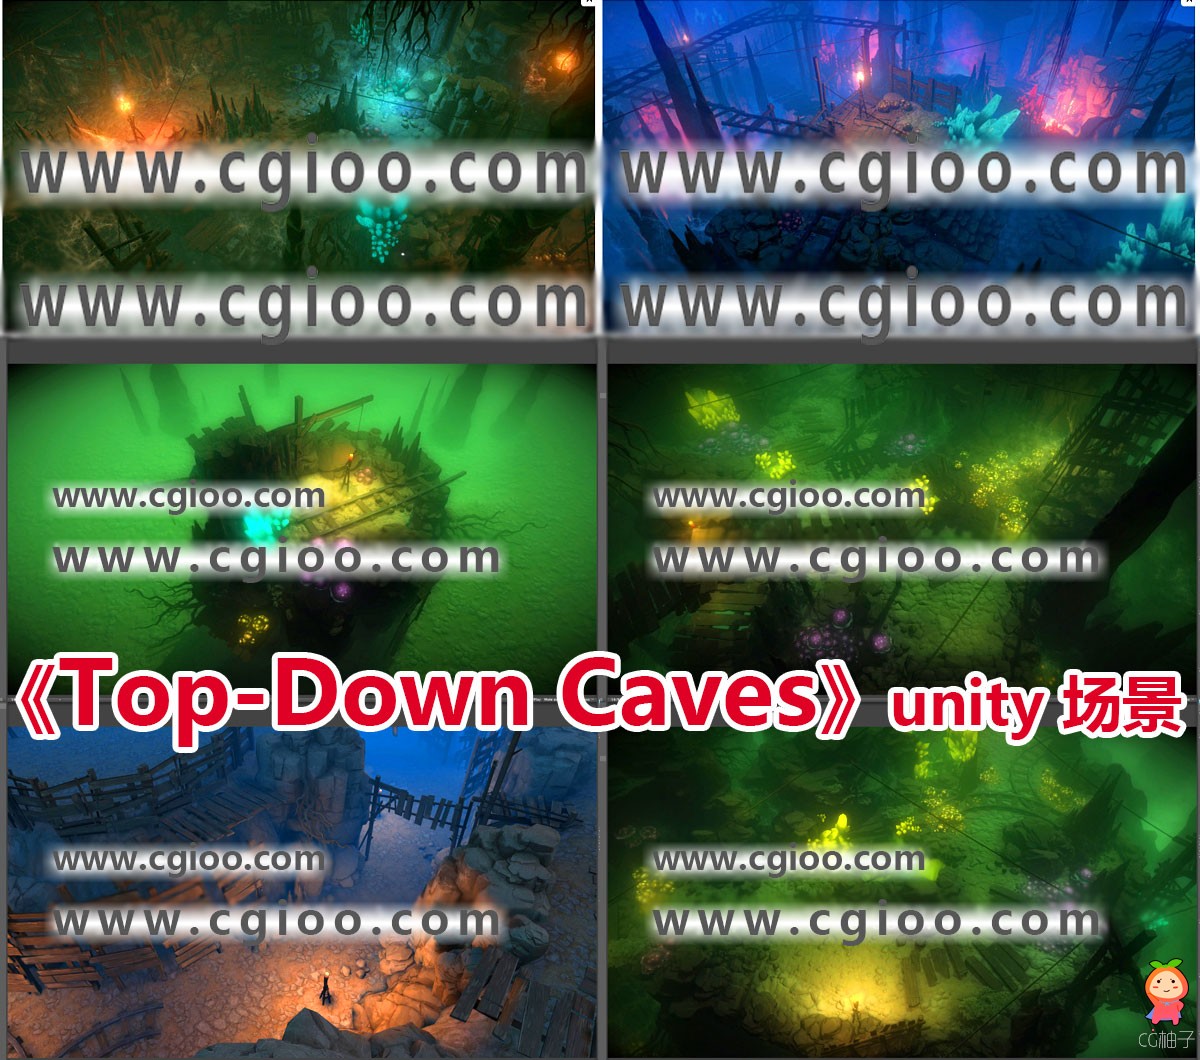 《Top - down caves》unity3D场景，3D场景模型资源unitypackage下载